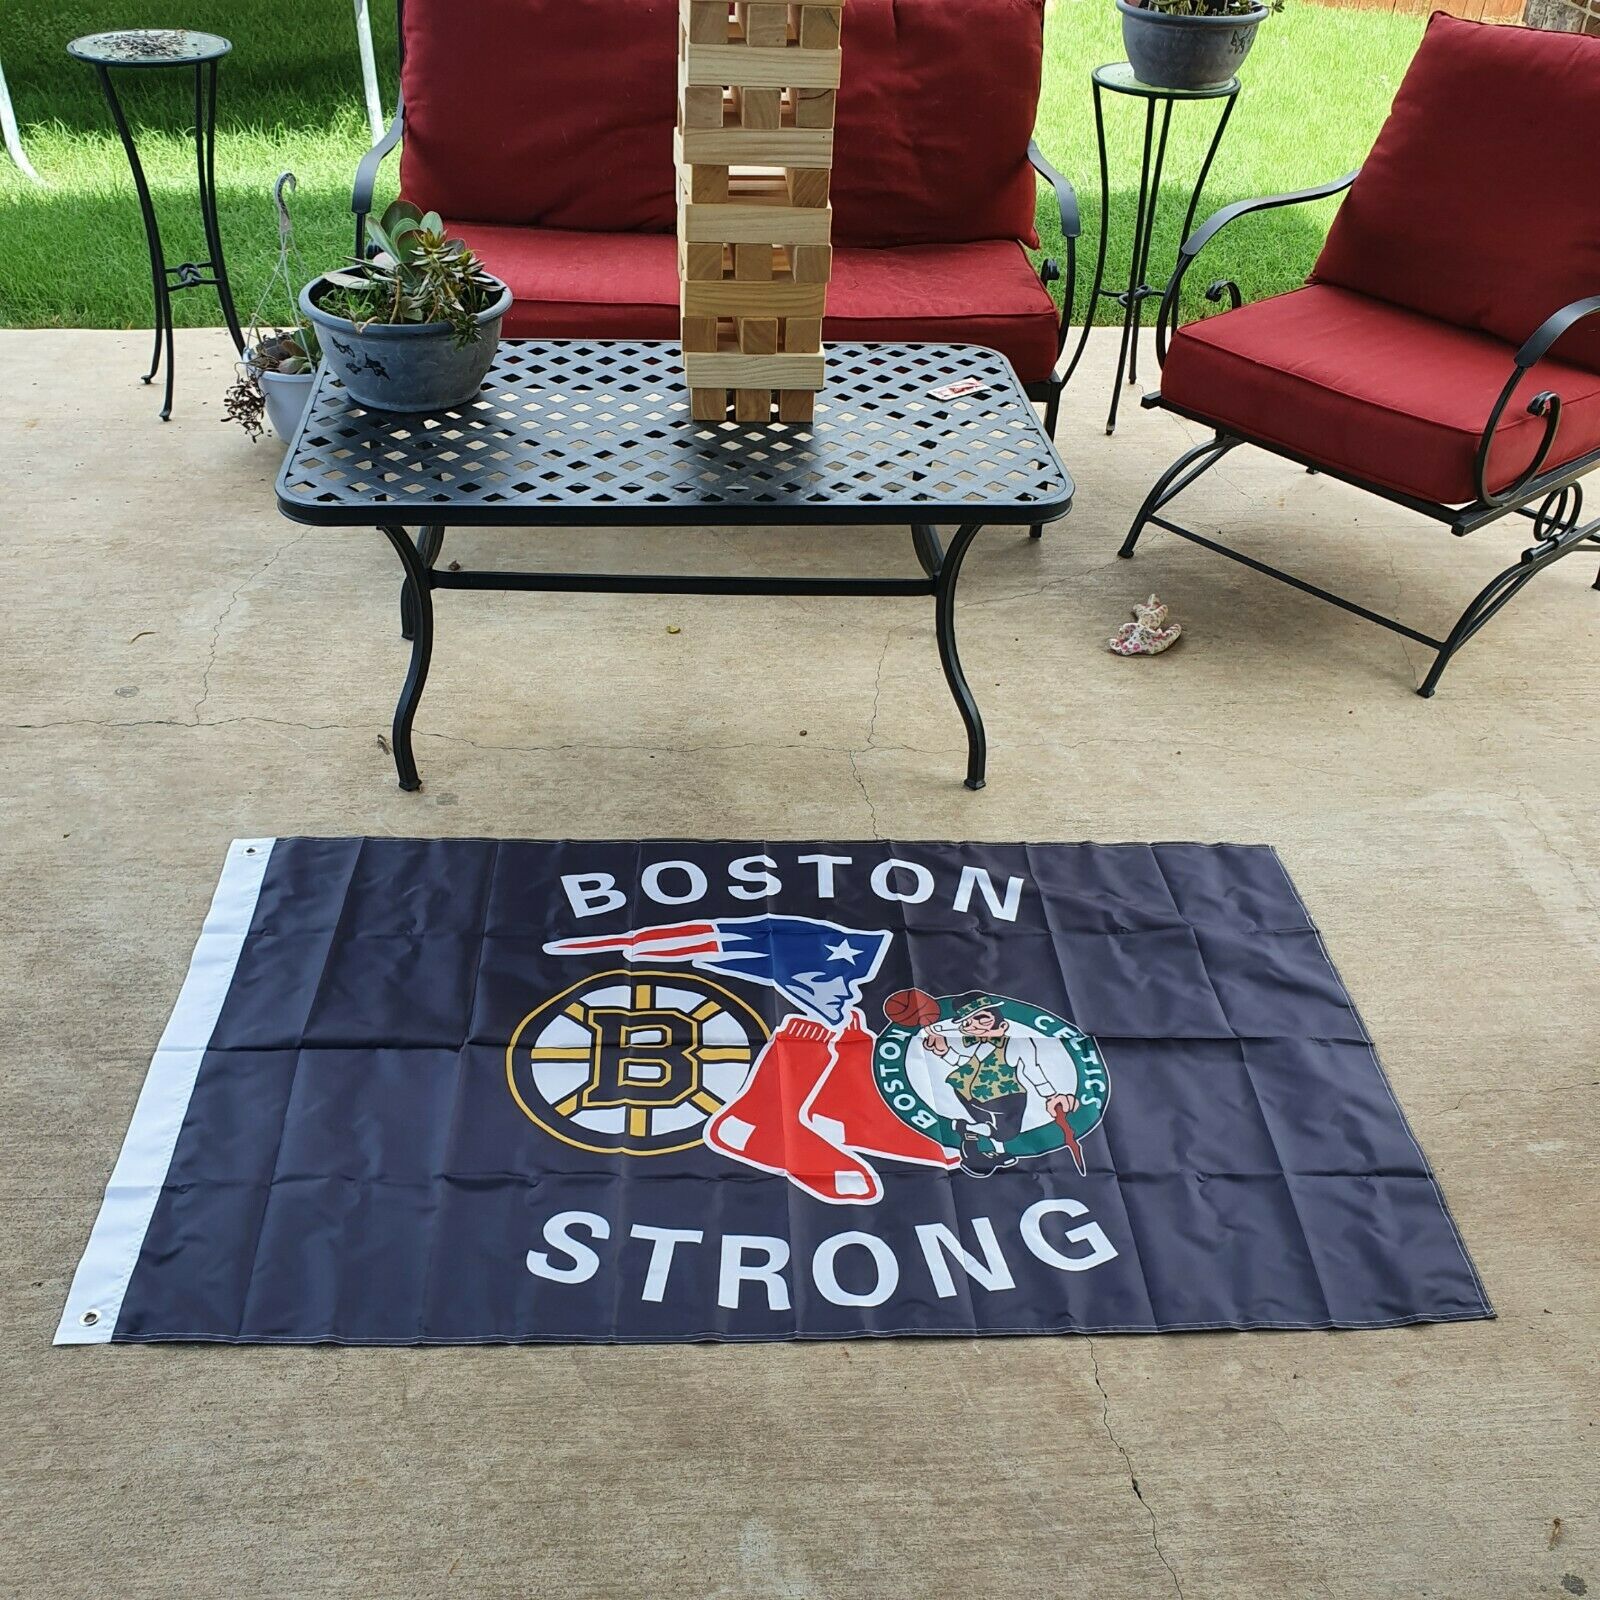 Boston Strong Patriots Celtics Red Sox Bruins Flag Banner New 3x5 Ft